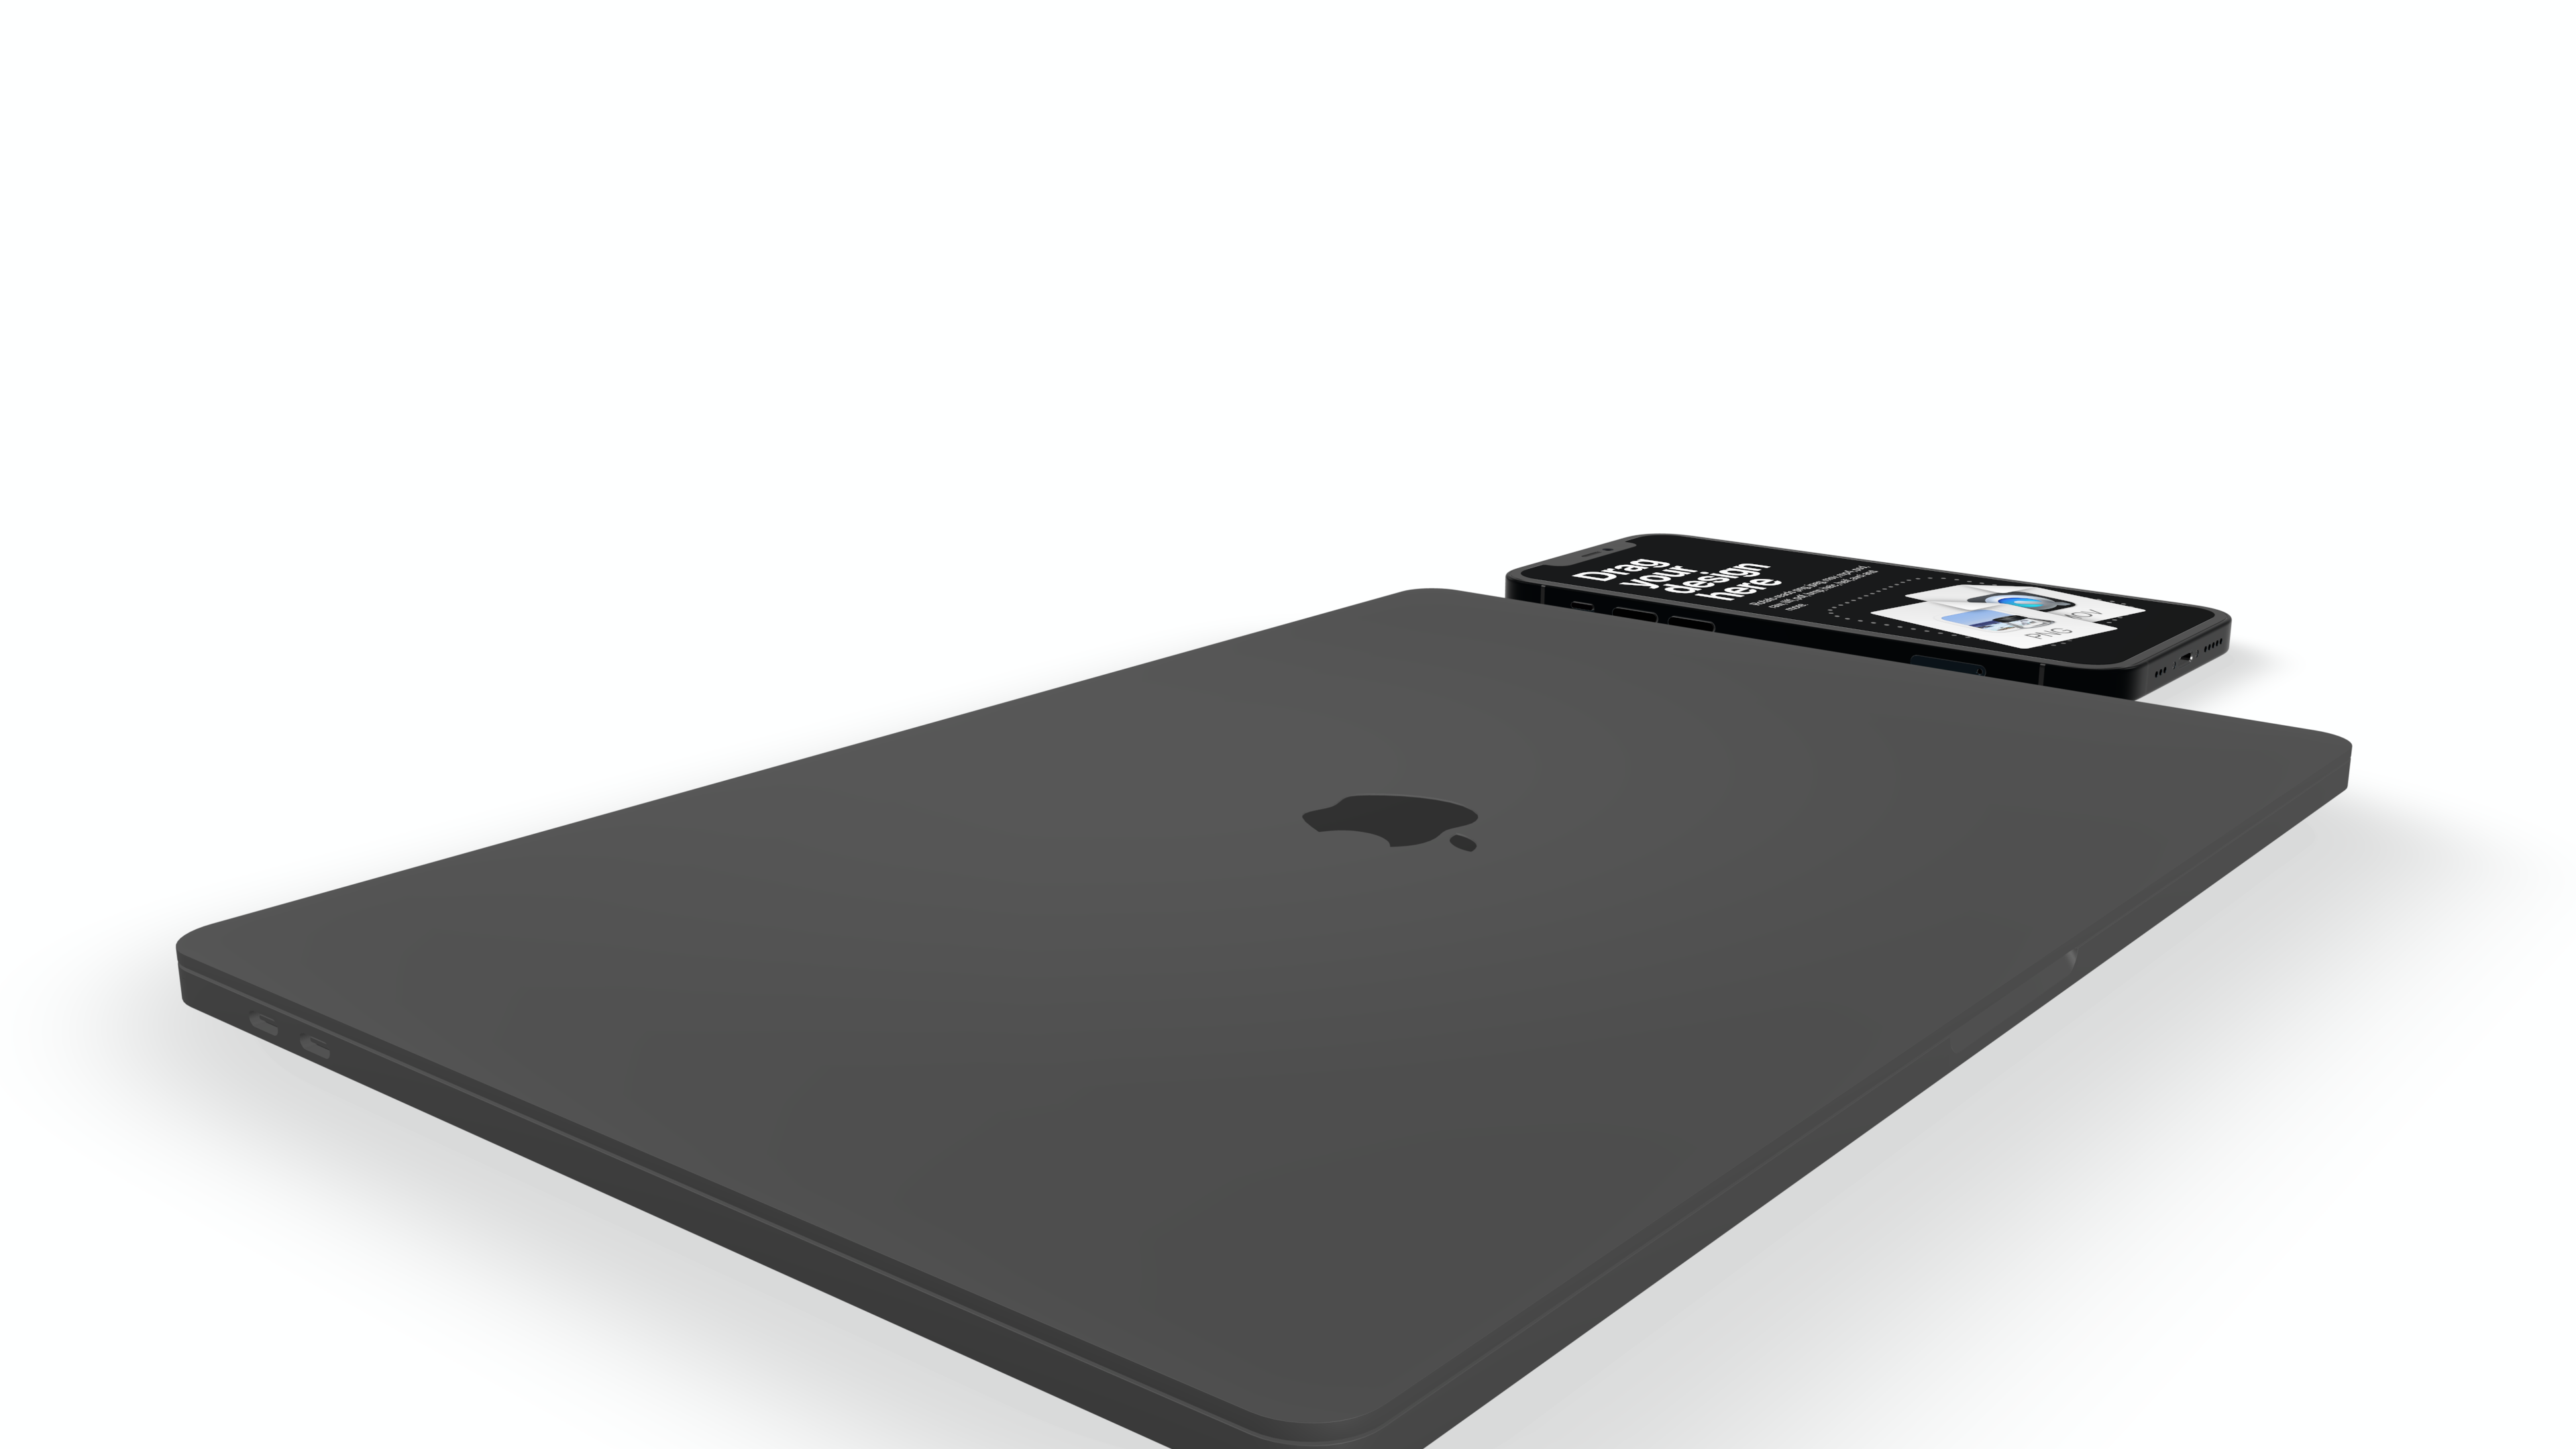 Closed macbook next to a phone